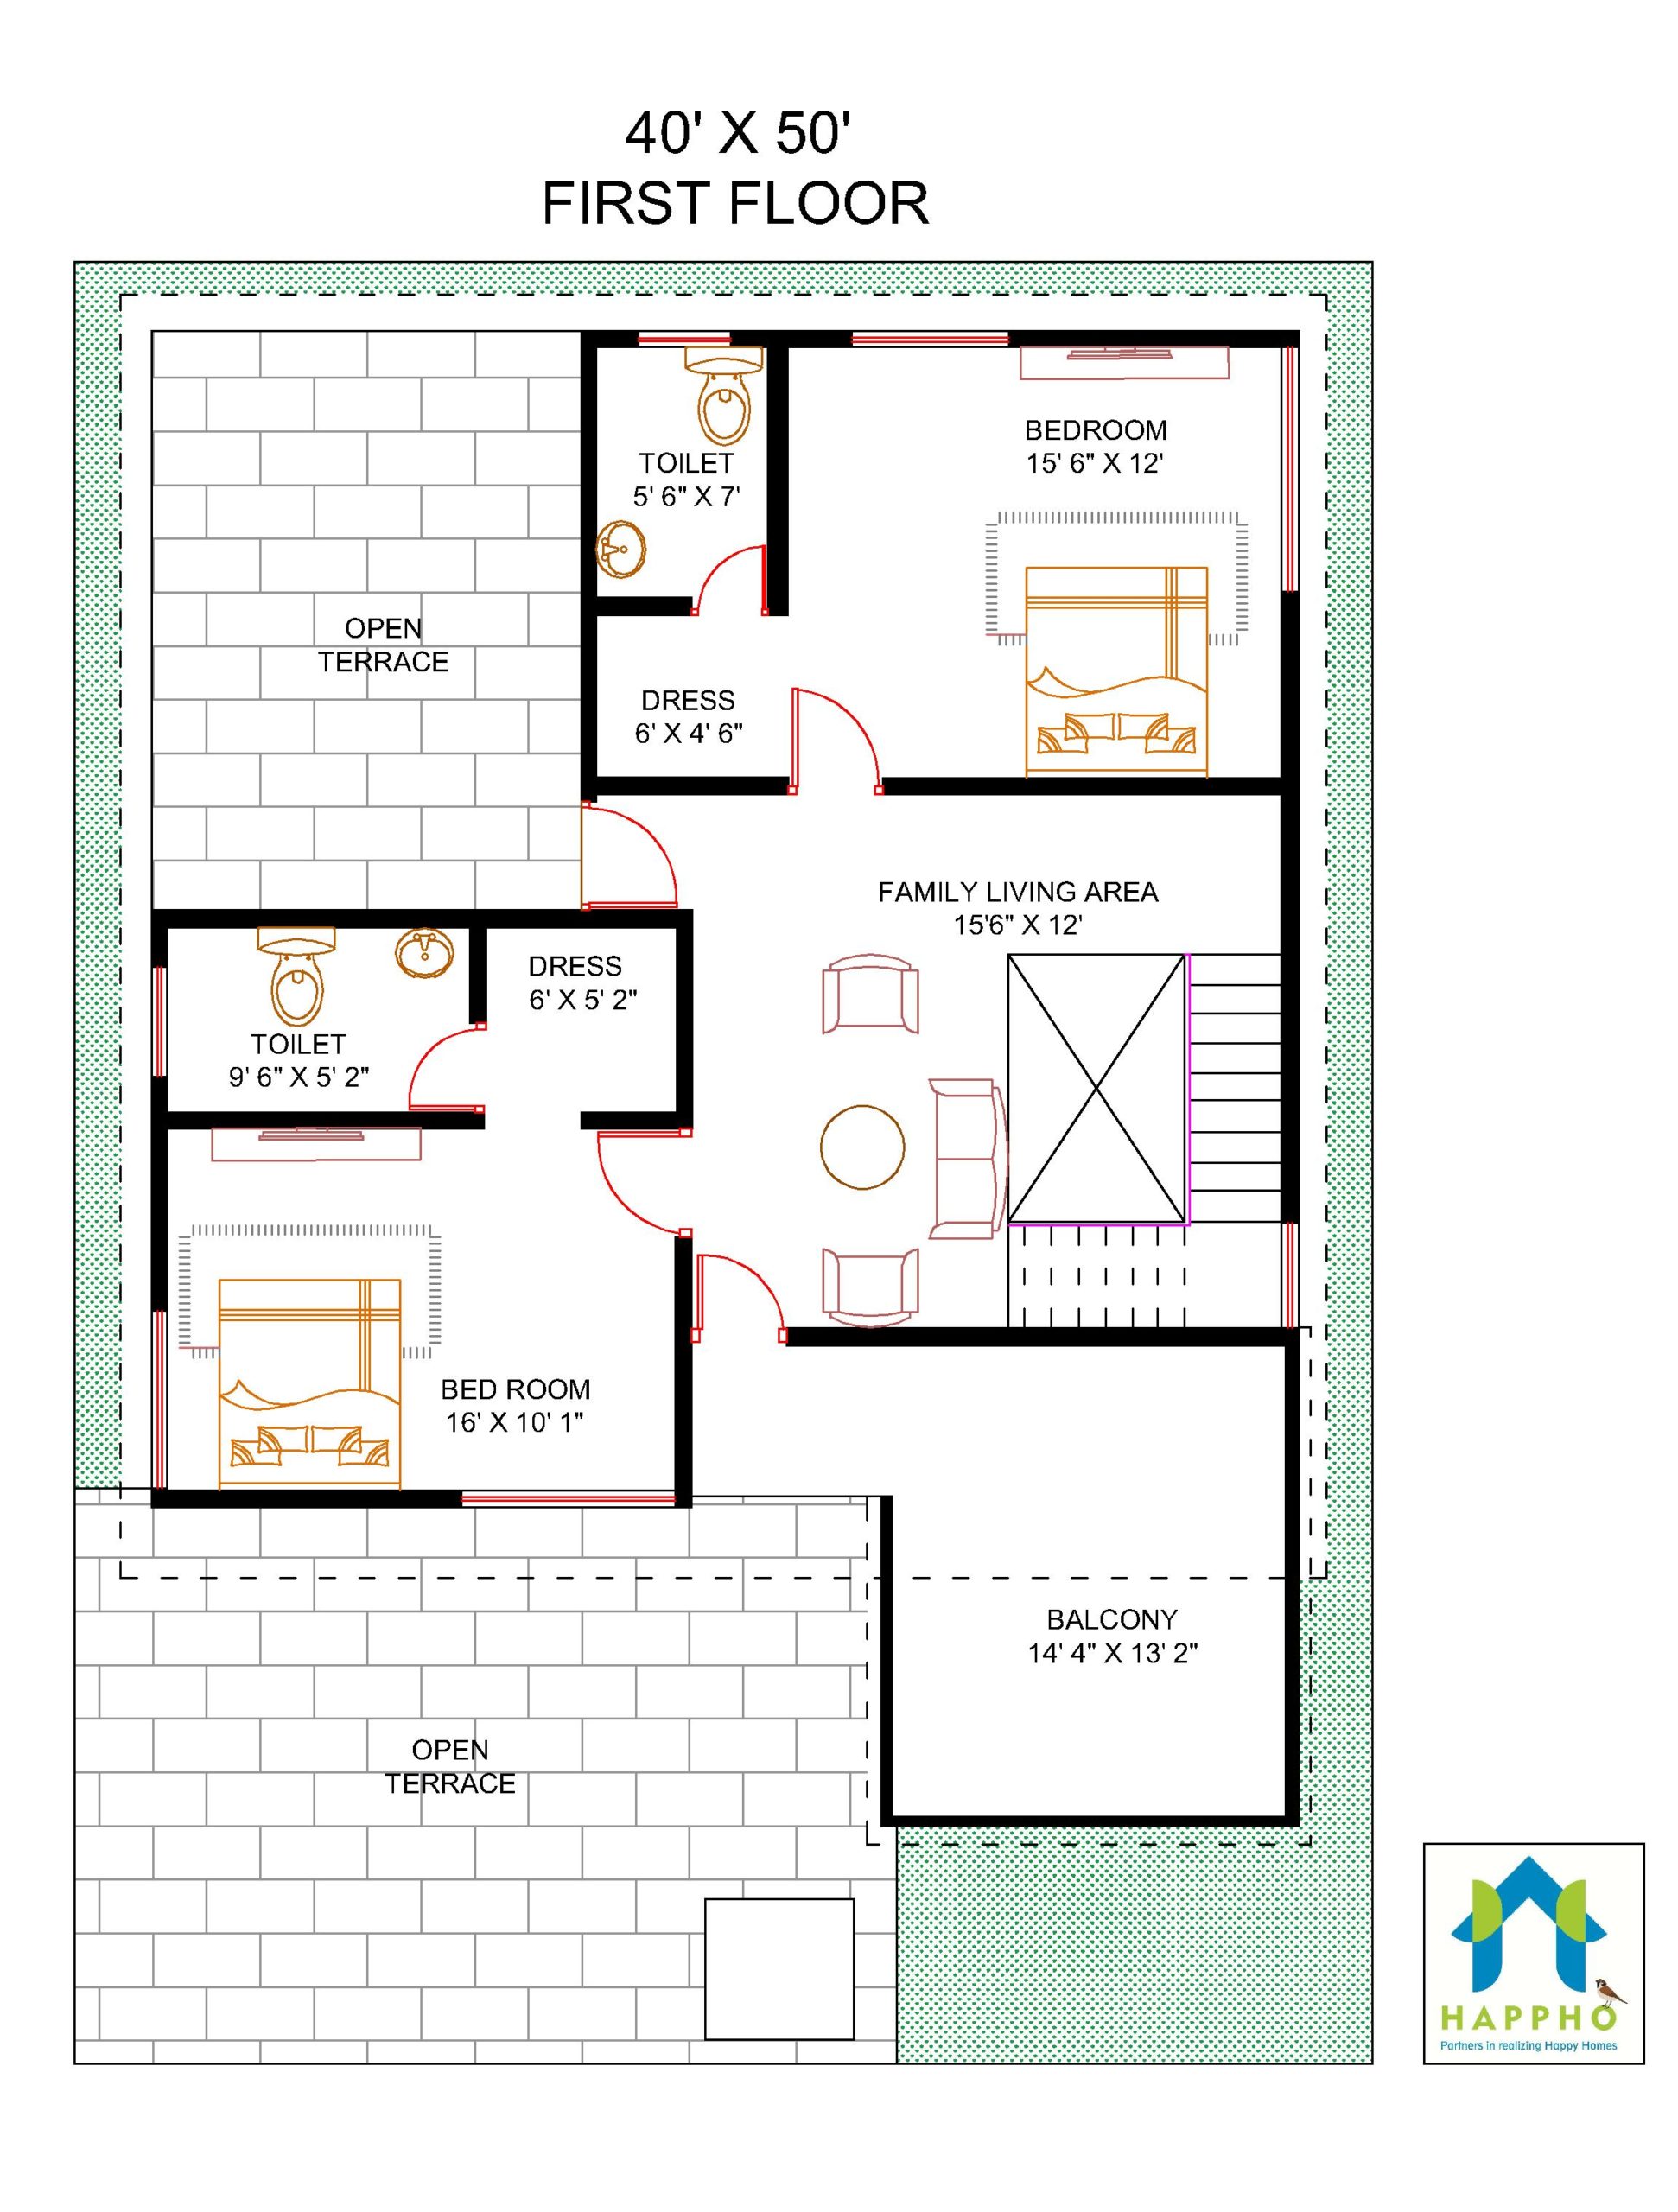 rek Besparing maak het plat 40X50 Duplex house plan design || 4BHK Plan-053 - Happho